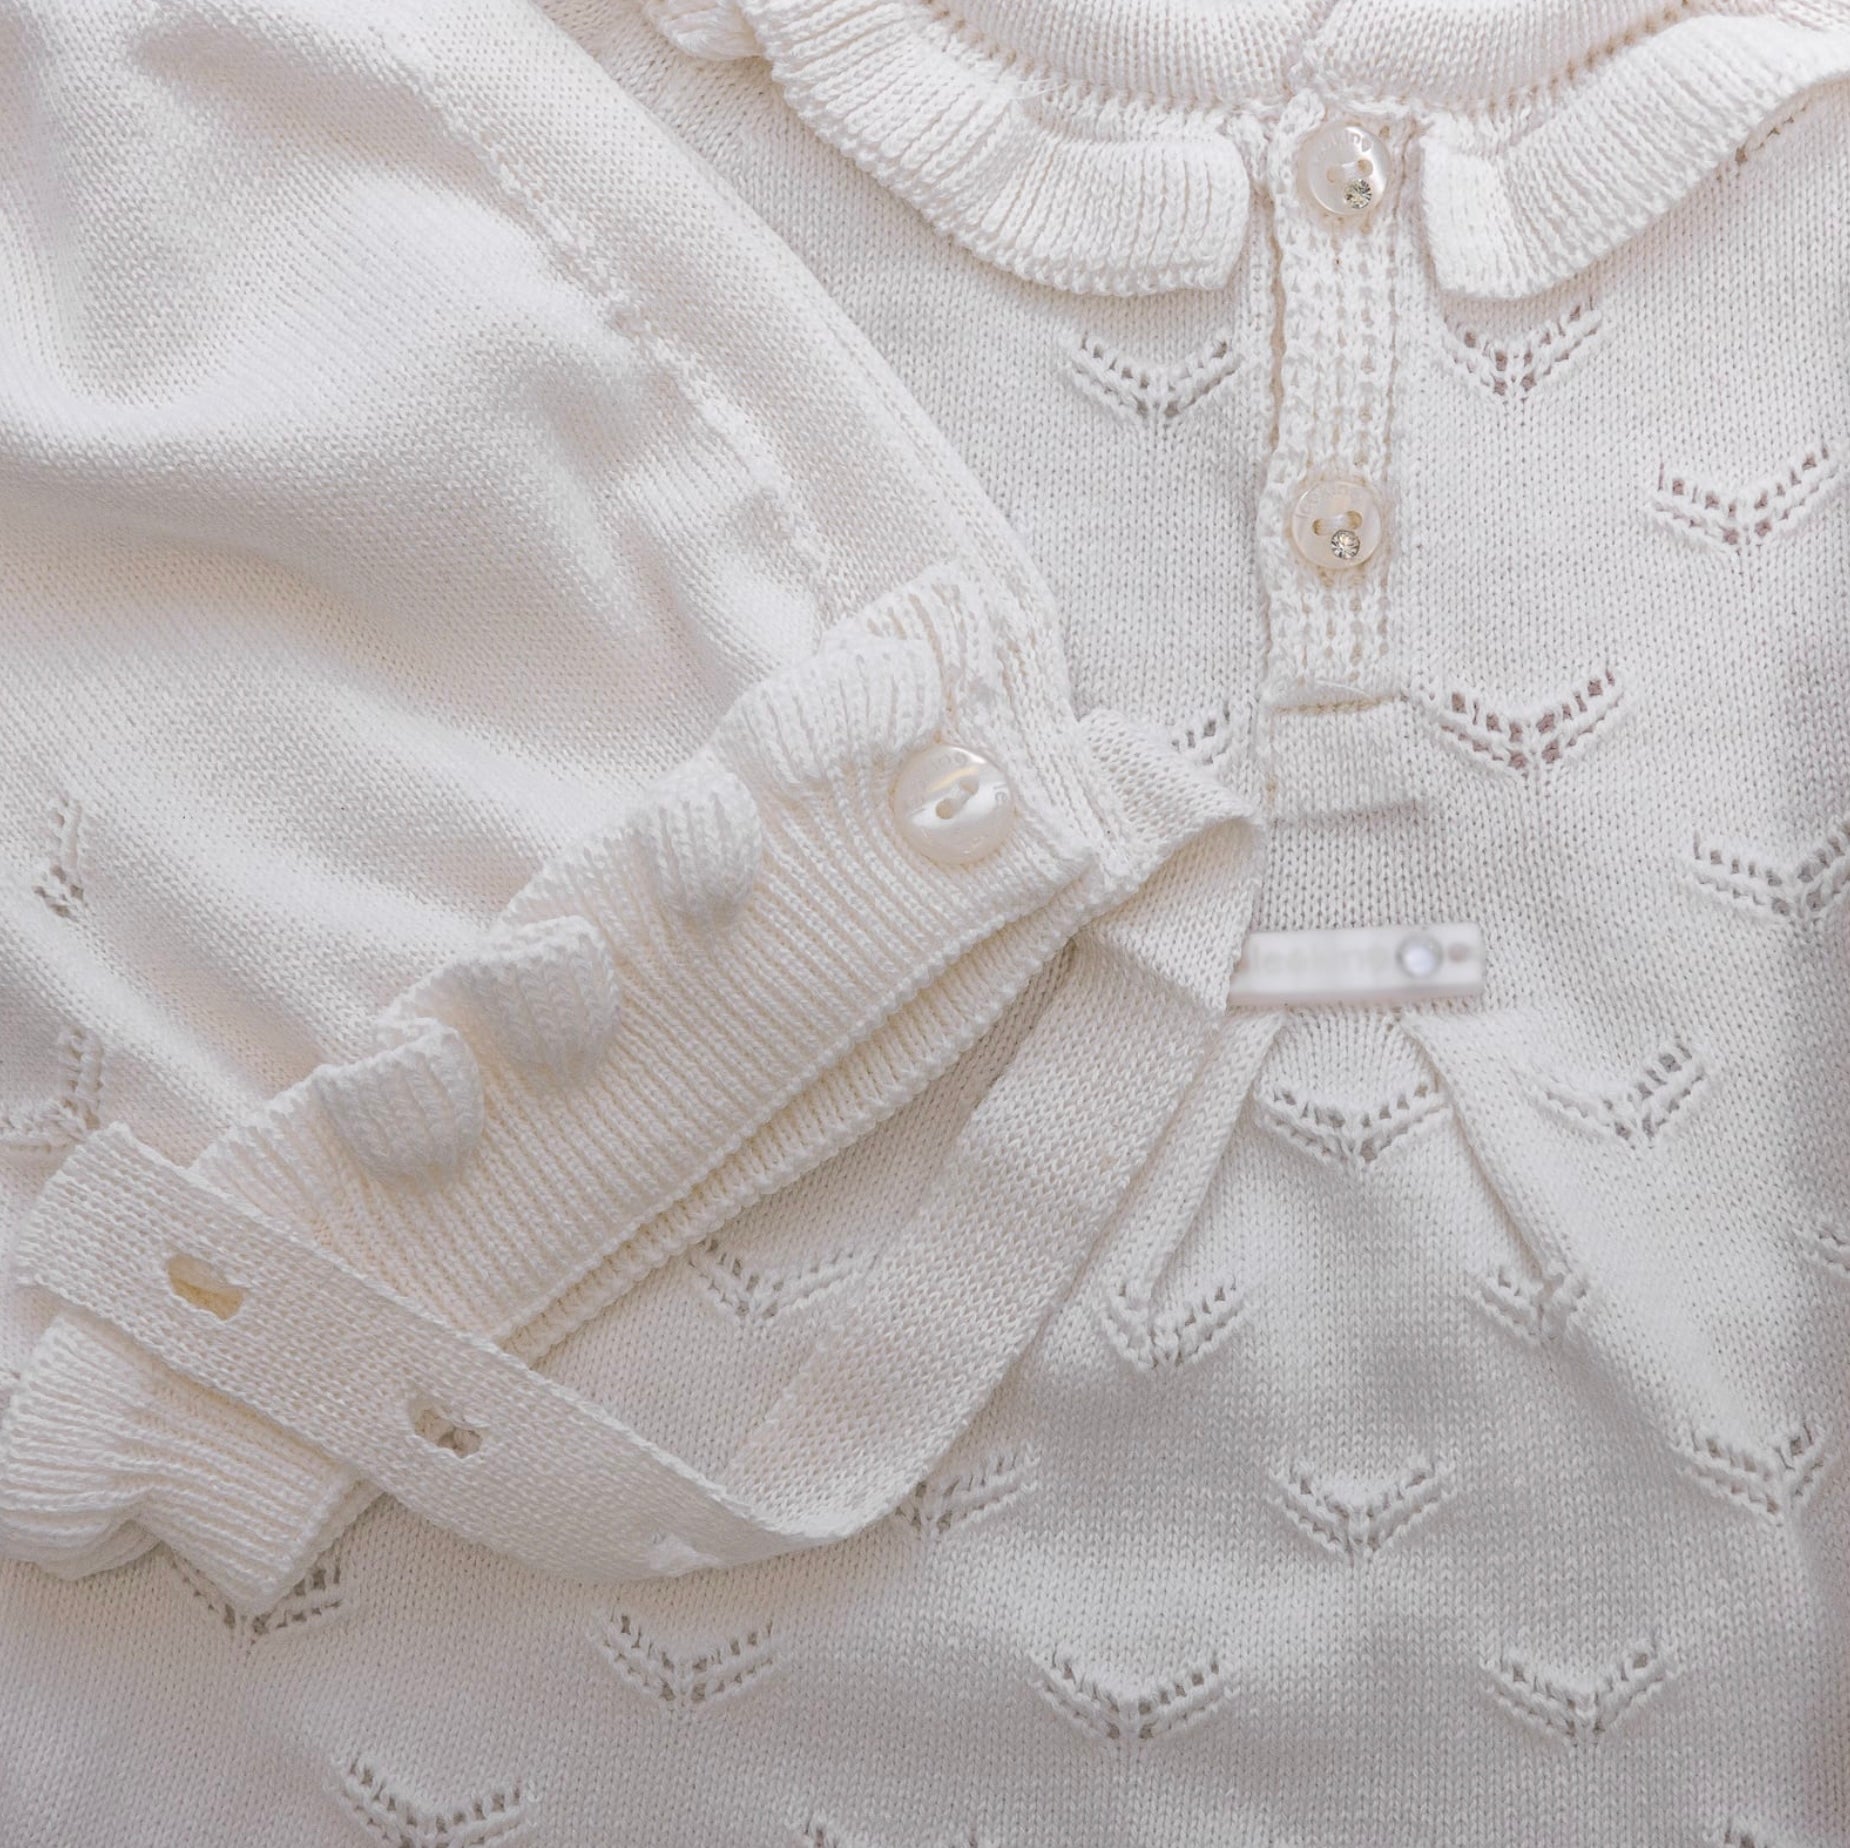 Newborn white soft cotton giftset